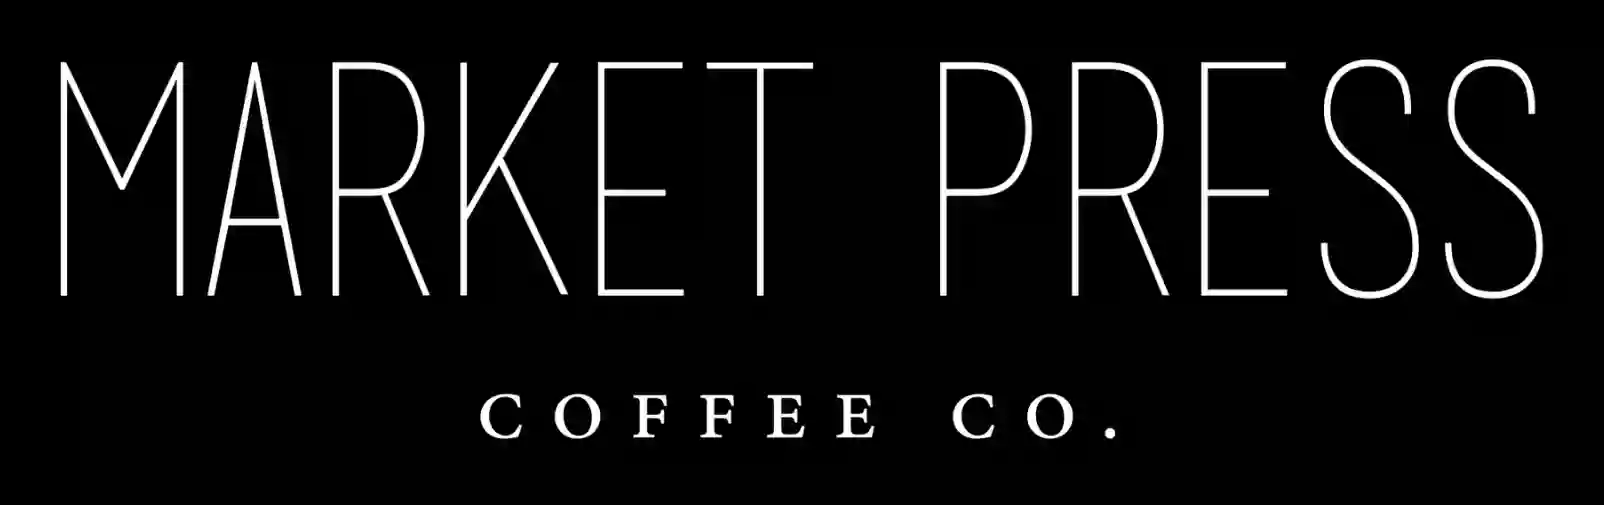 Market Press Coffee Co.